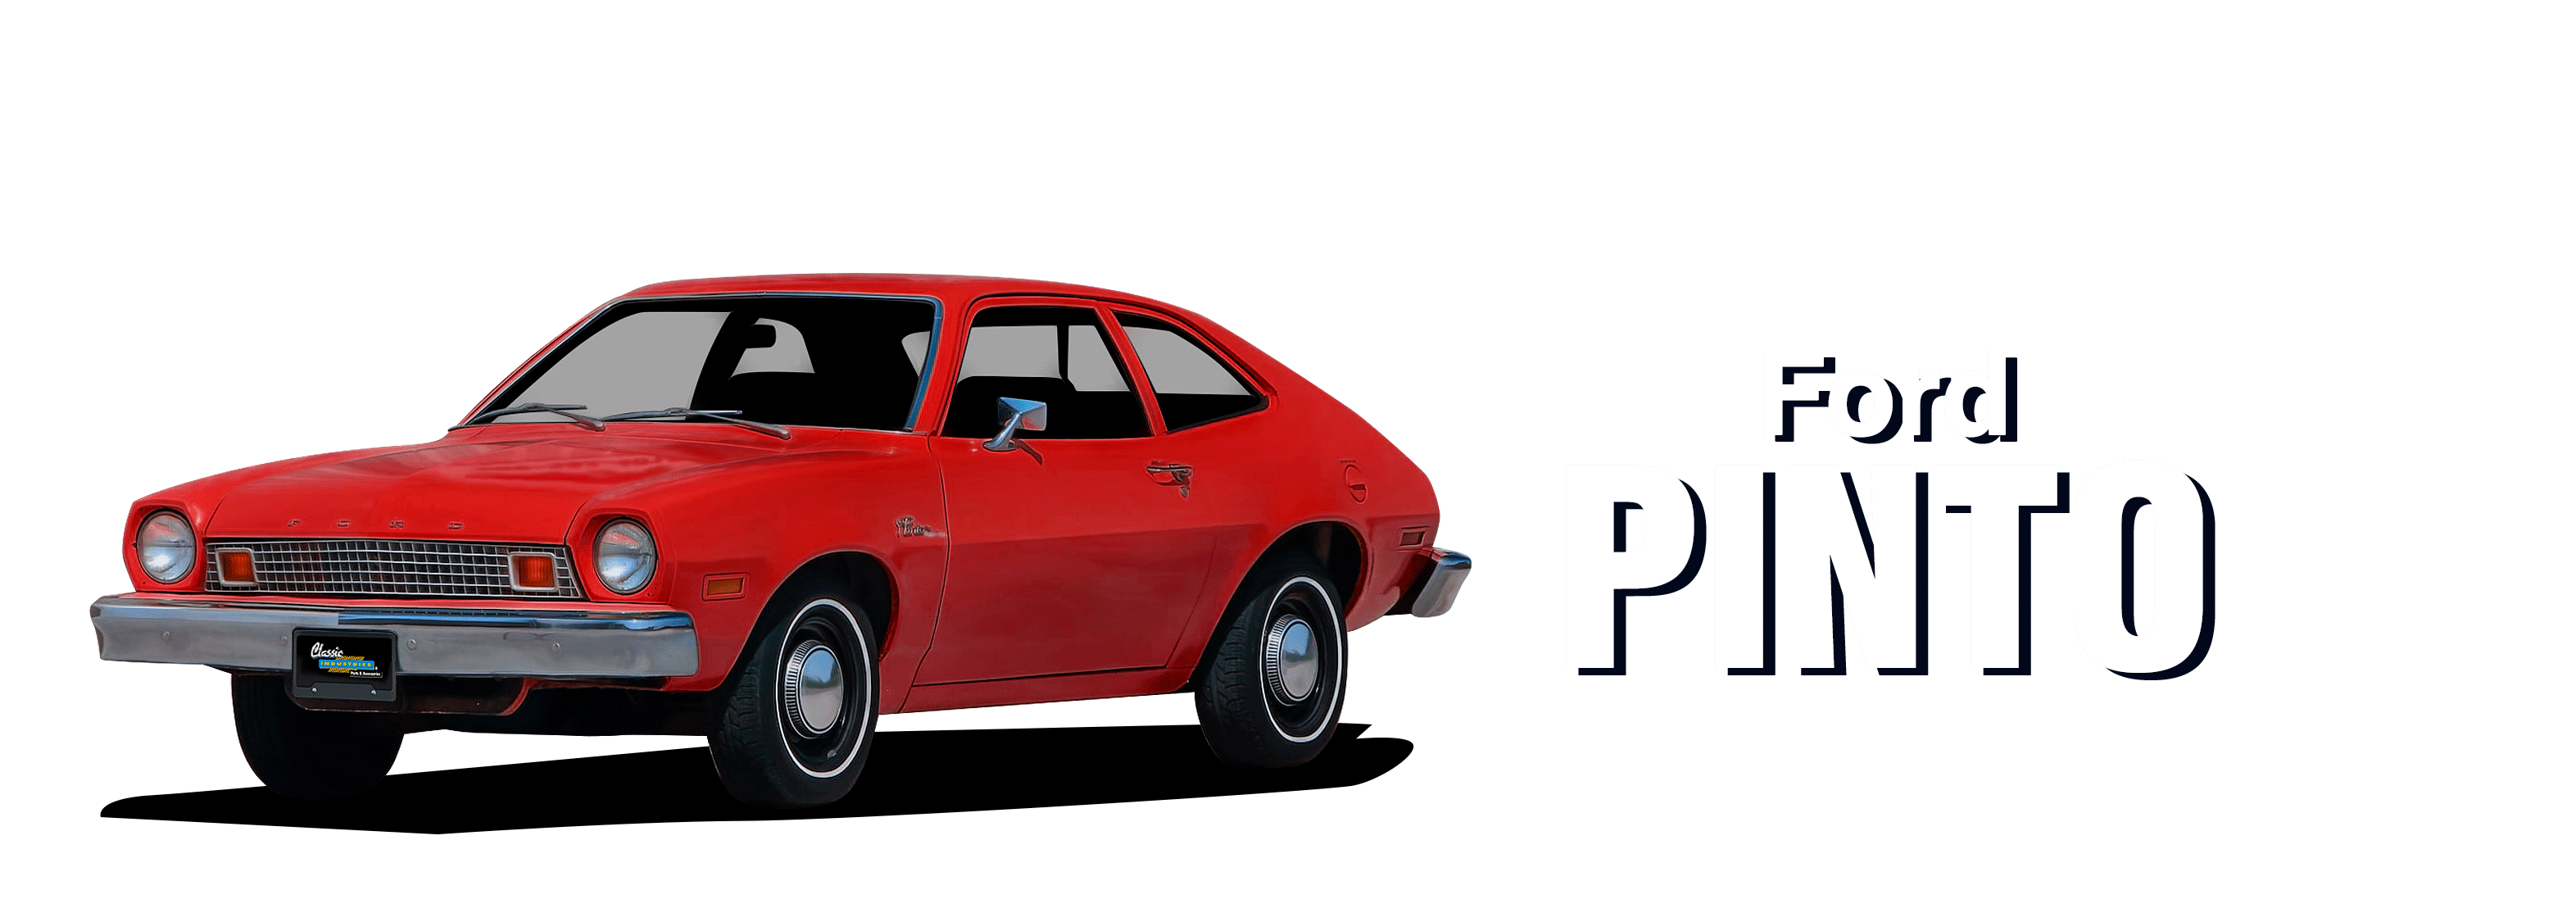 Ford-Pinto-vehicle-desktop-2023